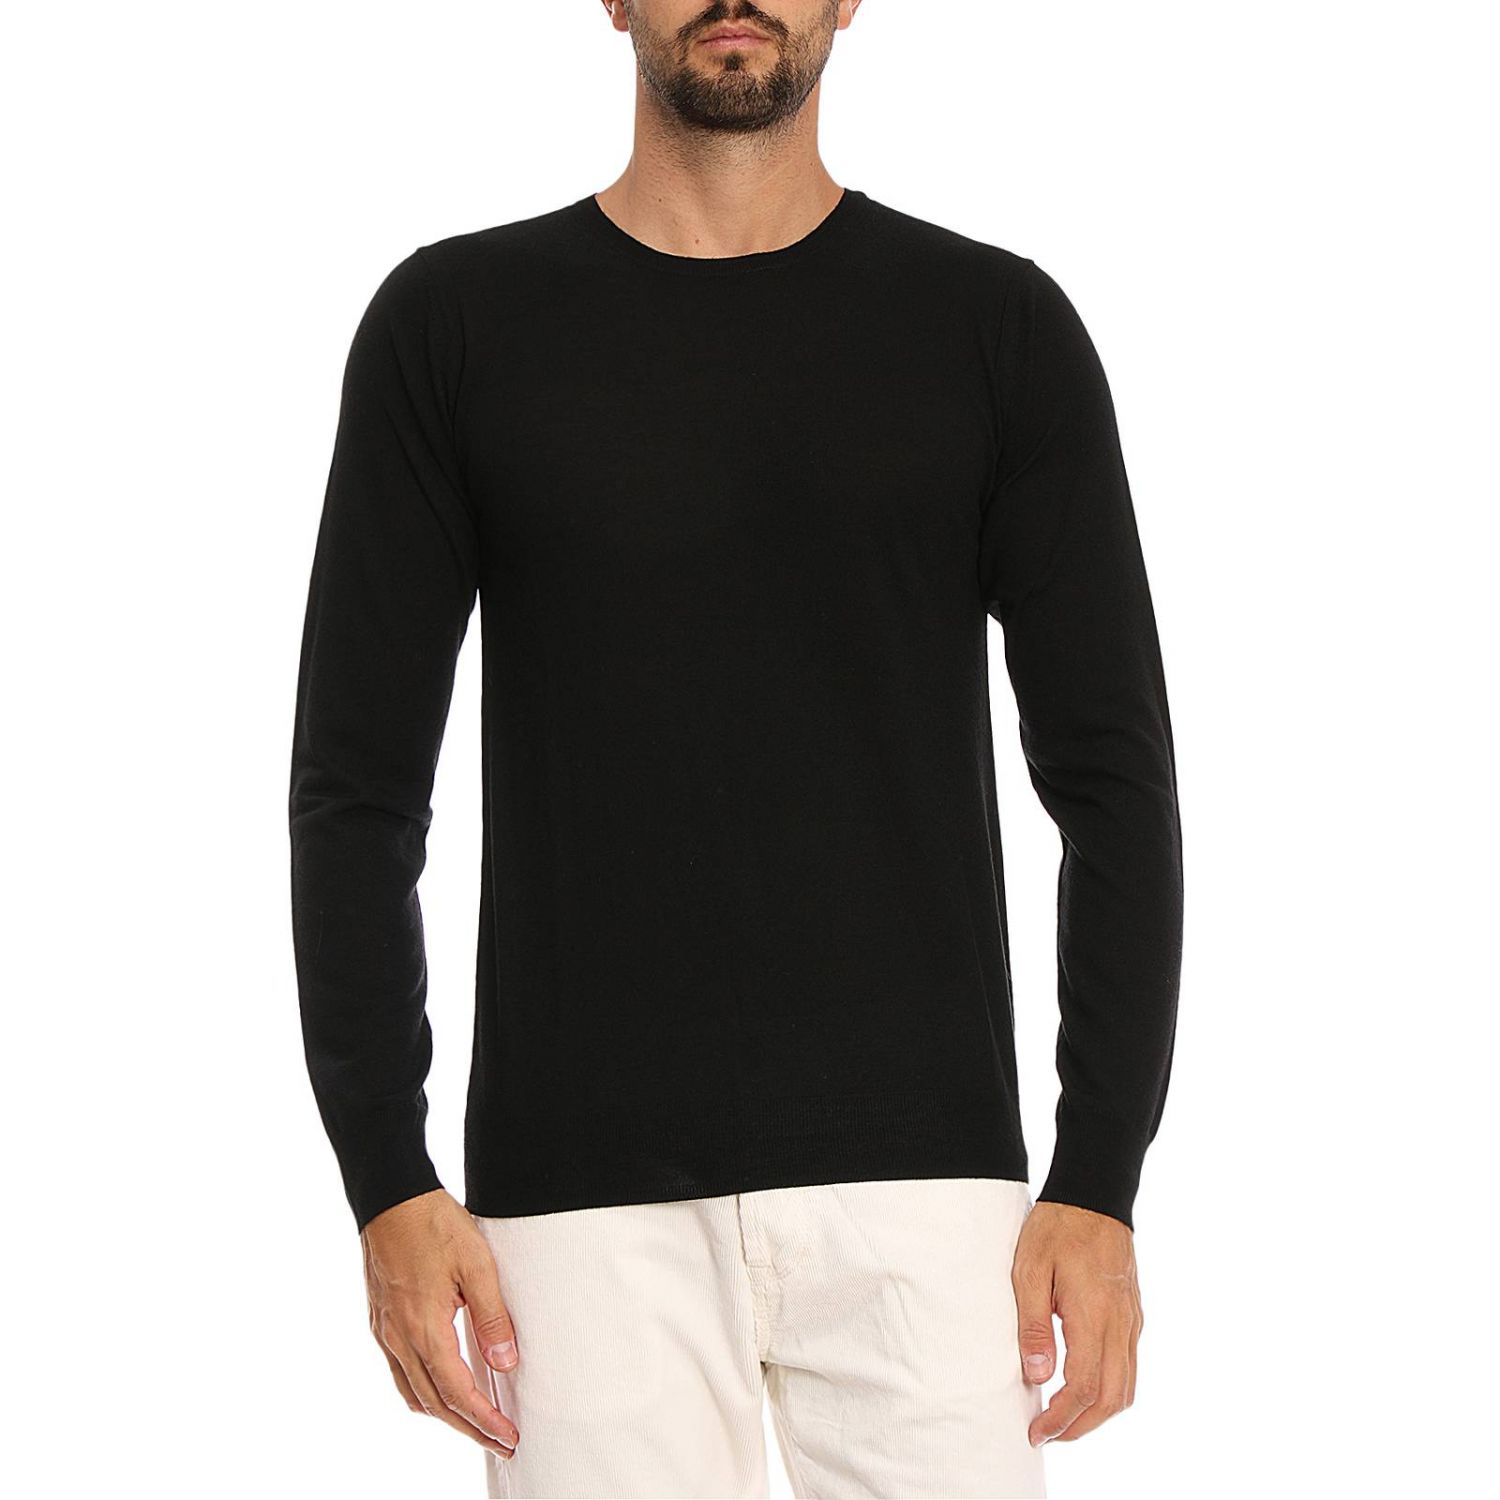 Paolo Pecora Outlet: Sweater men | Sweater Paolo Pecora Men Black ...